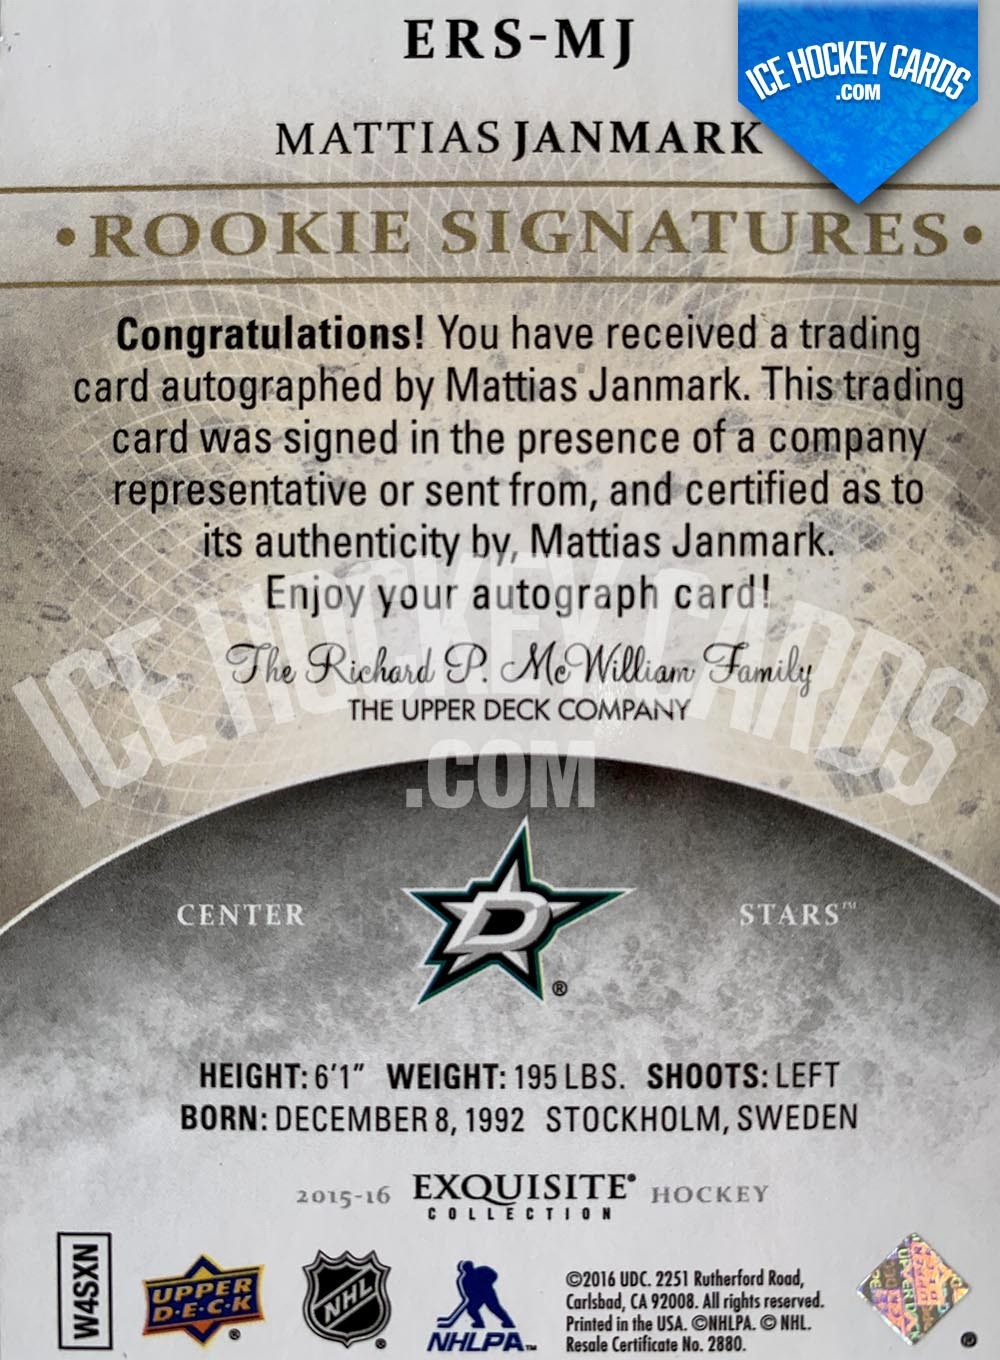 Upper Deck - Exquisite Collection 2015-16 - Mattias Janmark Rookie Signatures Auto Card back